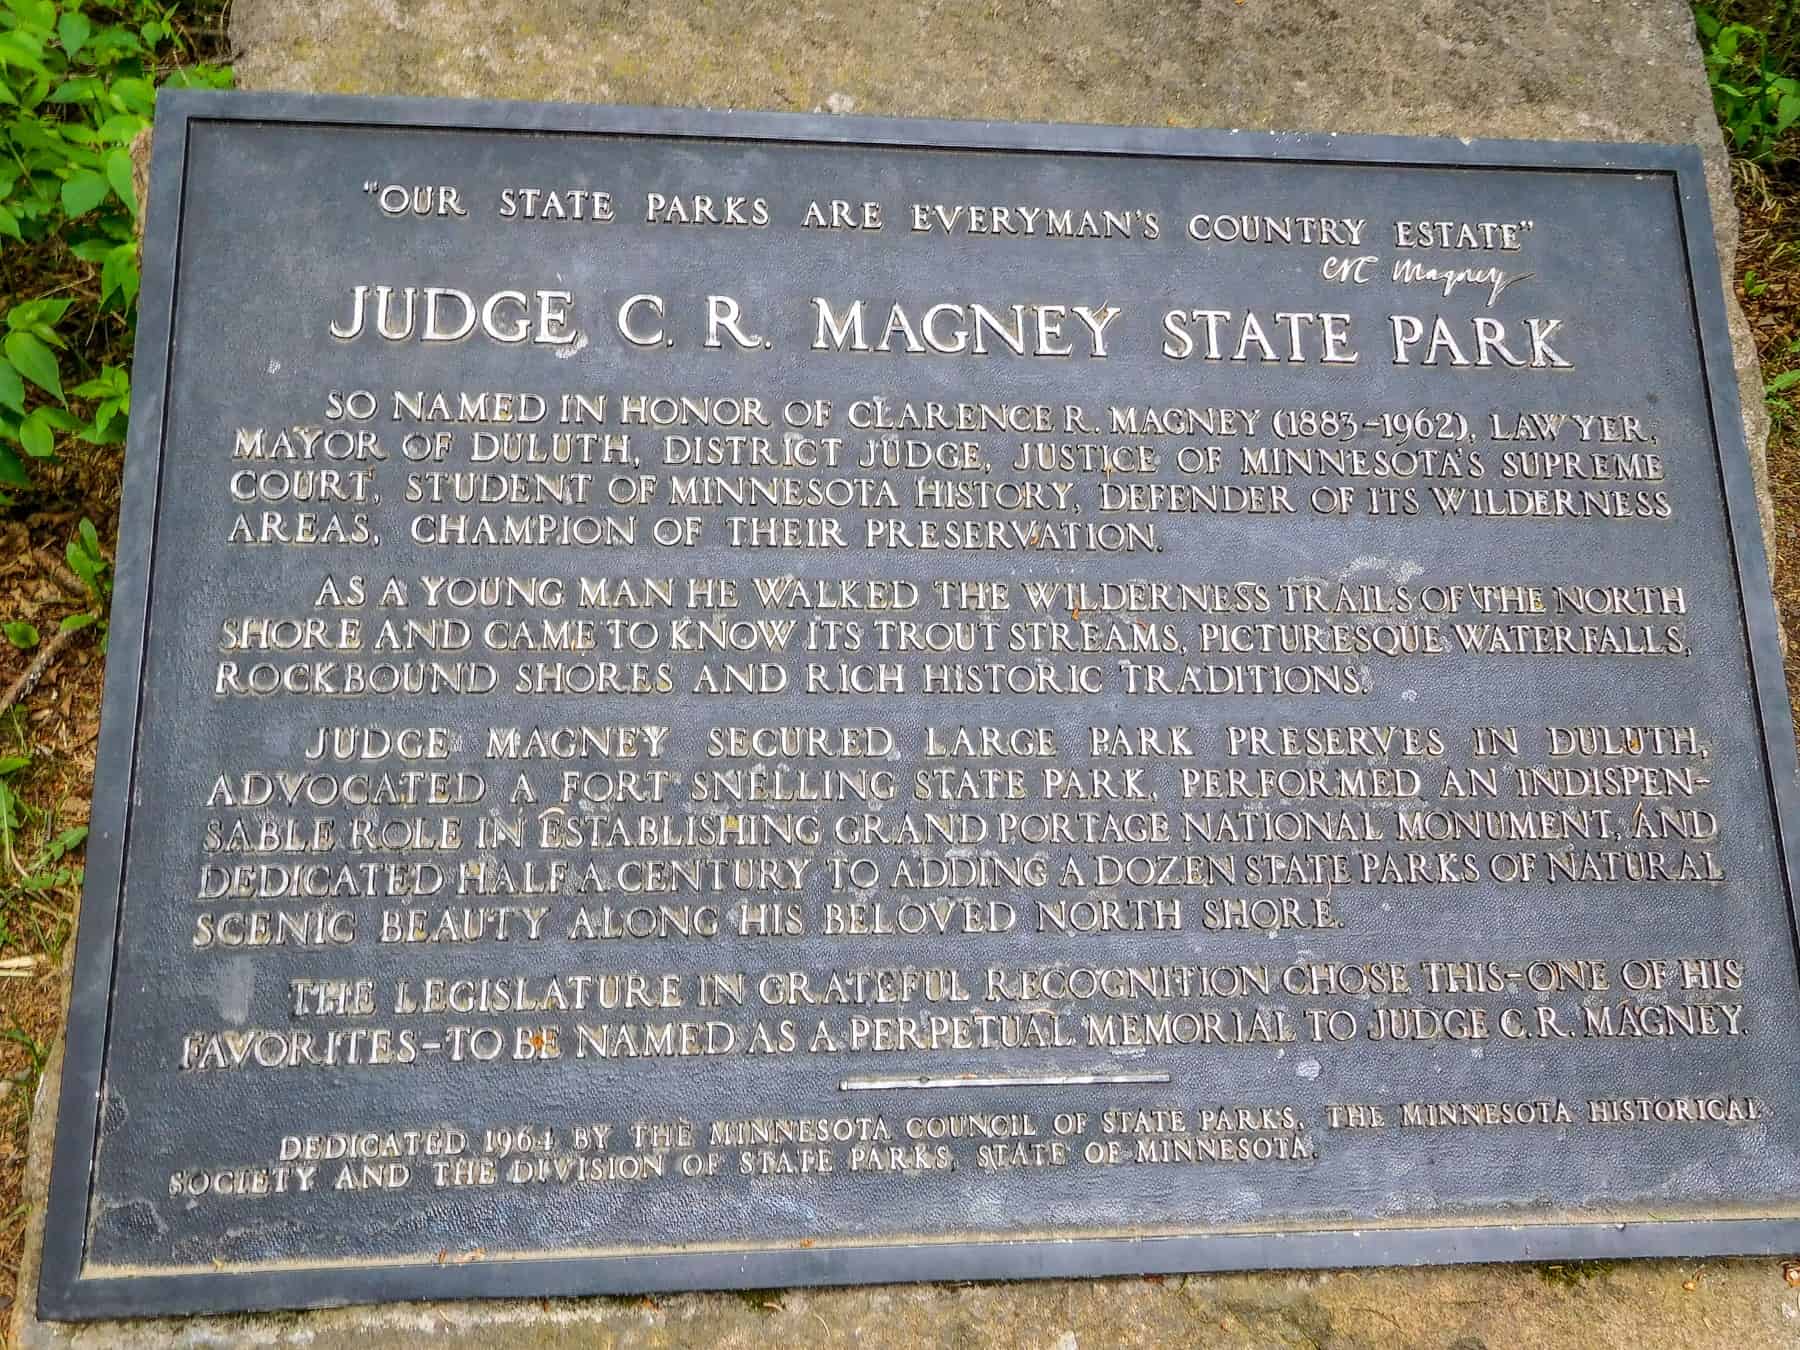 Judge CR Magney State Park park information plaque